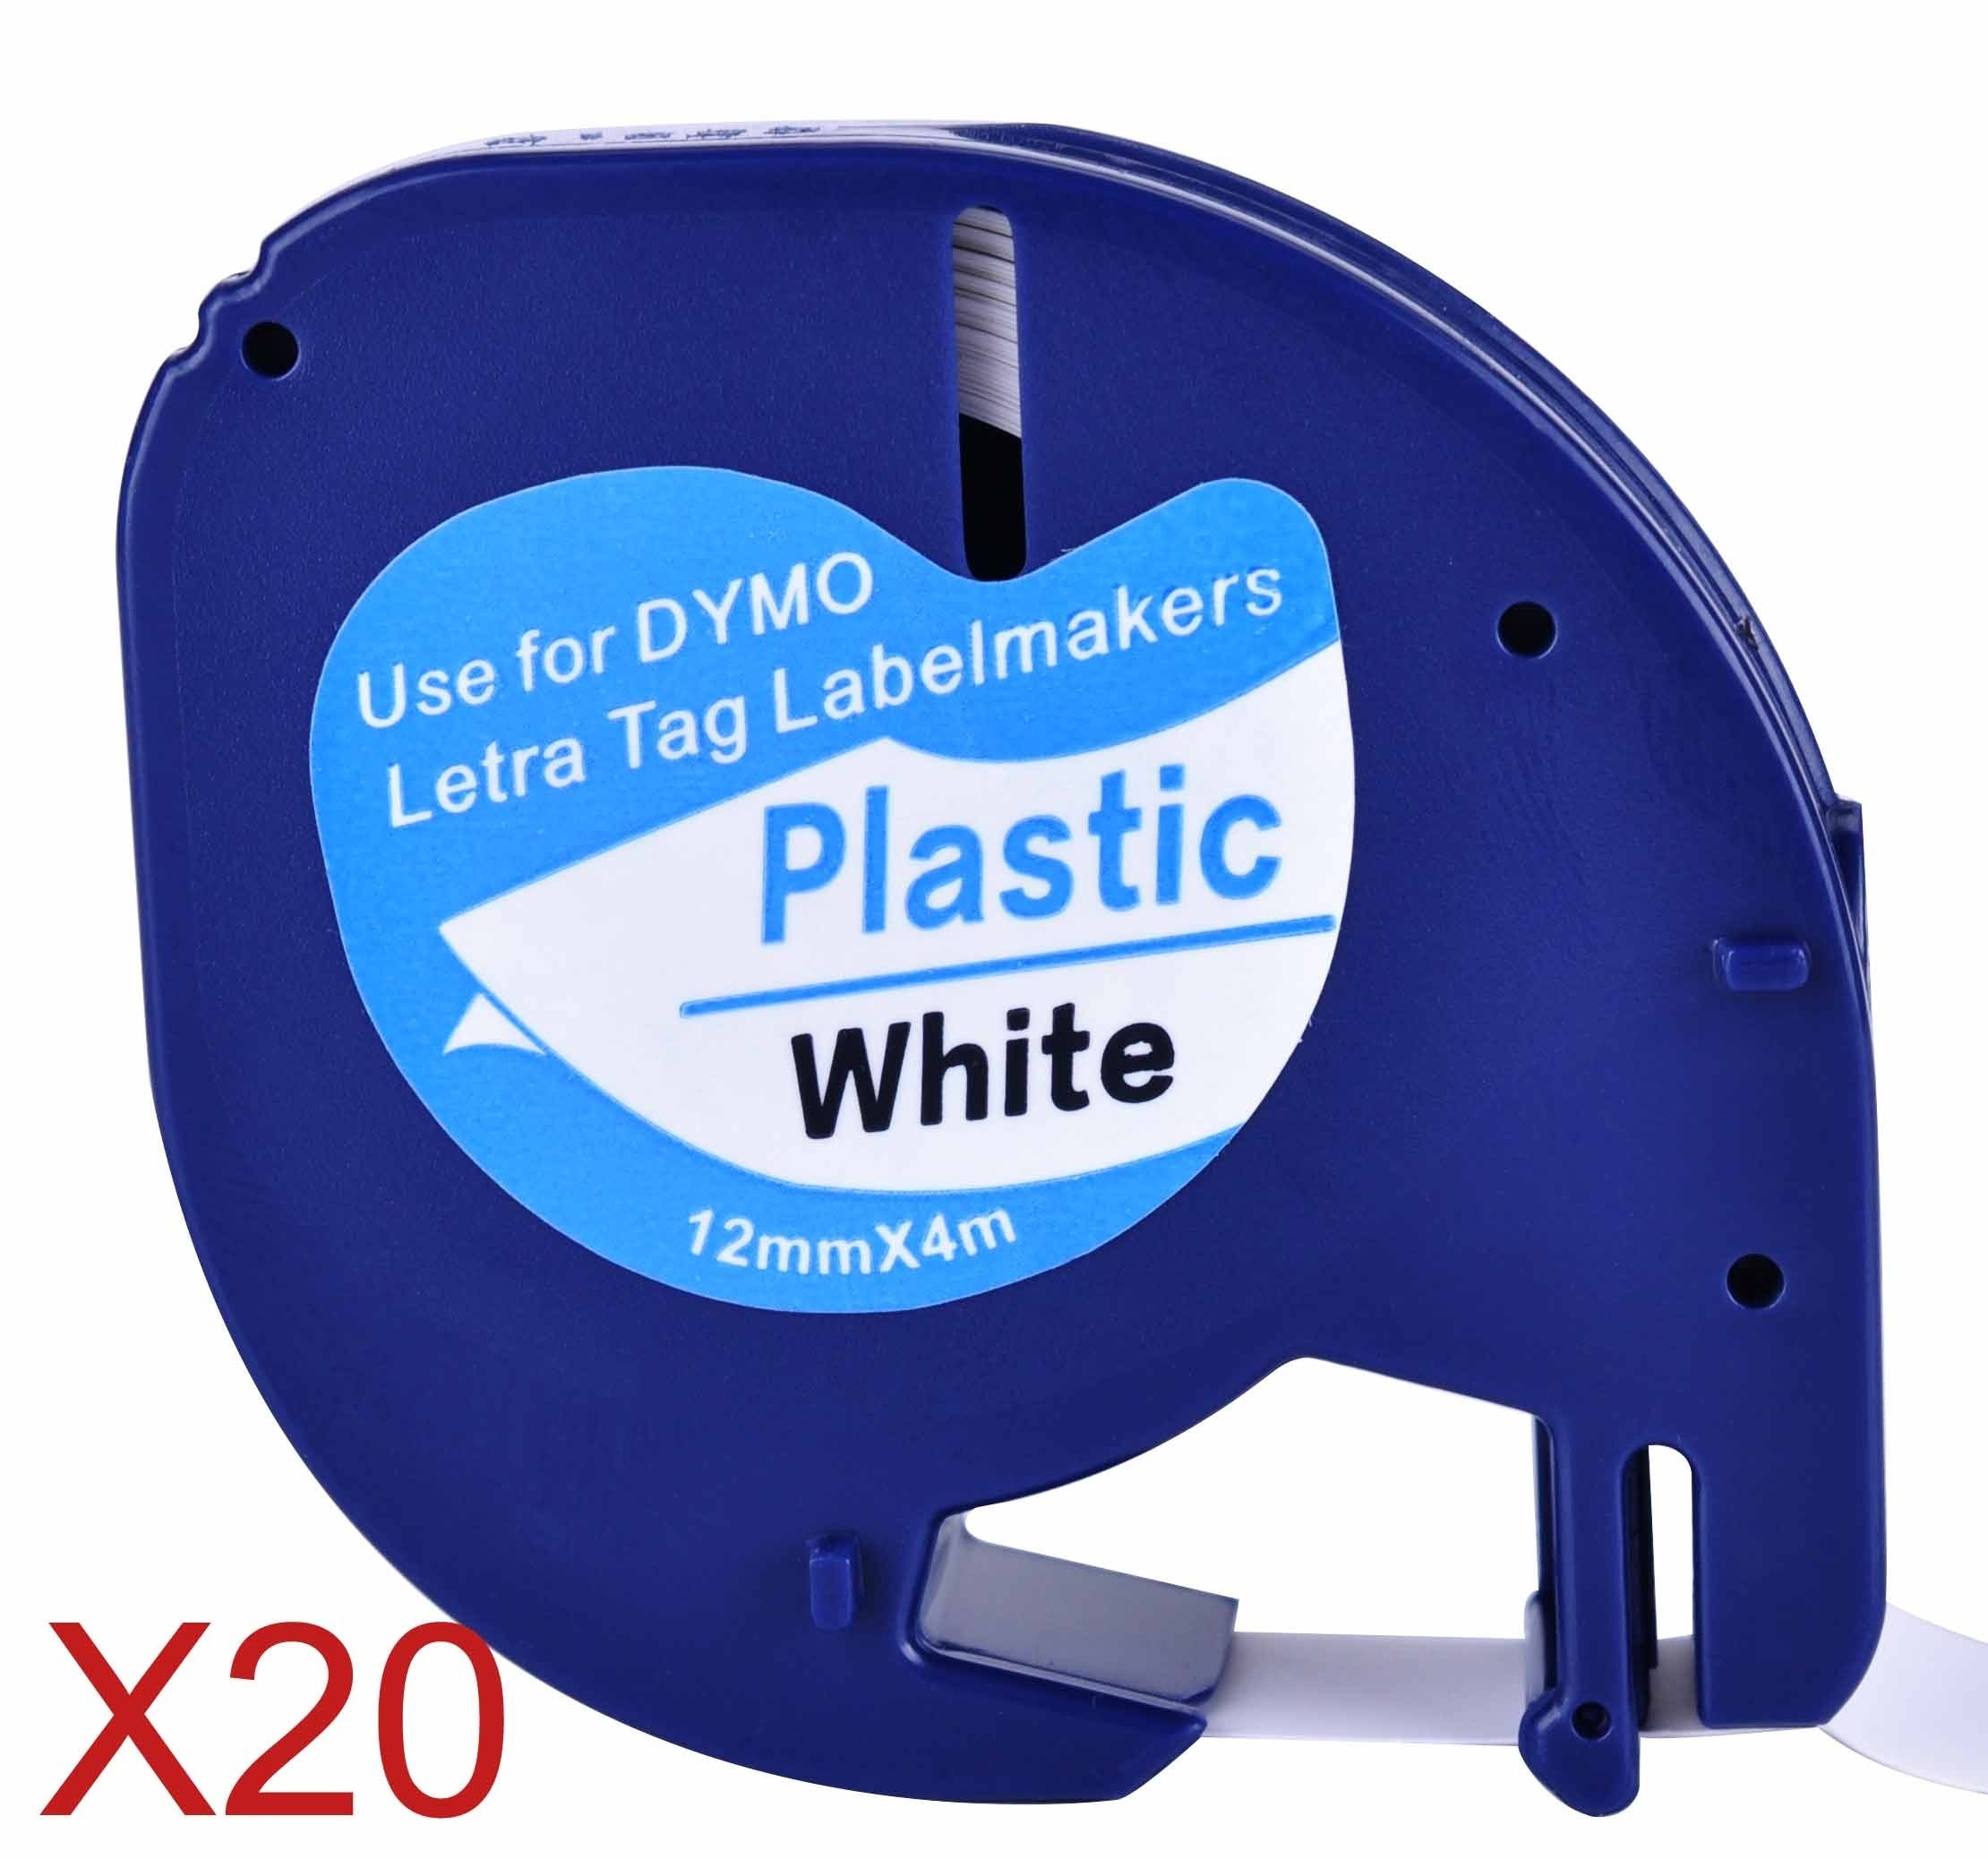 20 kompatible dymo letratag 91201 sort på hvidt  (12mm x 4m)  plastiketikettape til lt -100h,  lt -100t,  lt -110t, qx 50,  xr, xm,